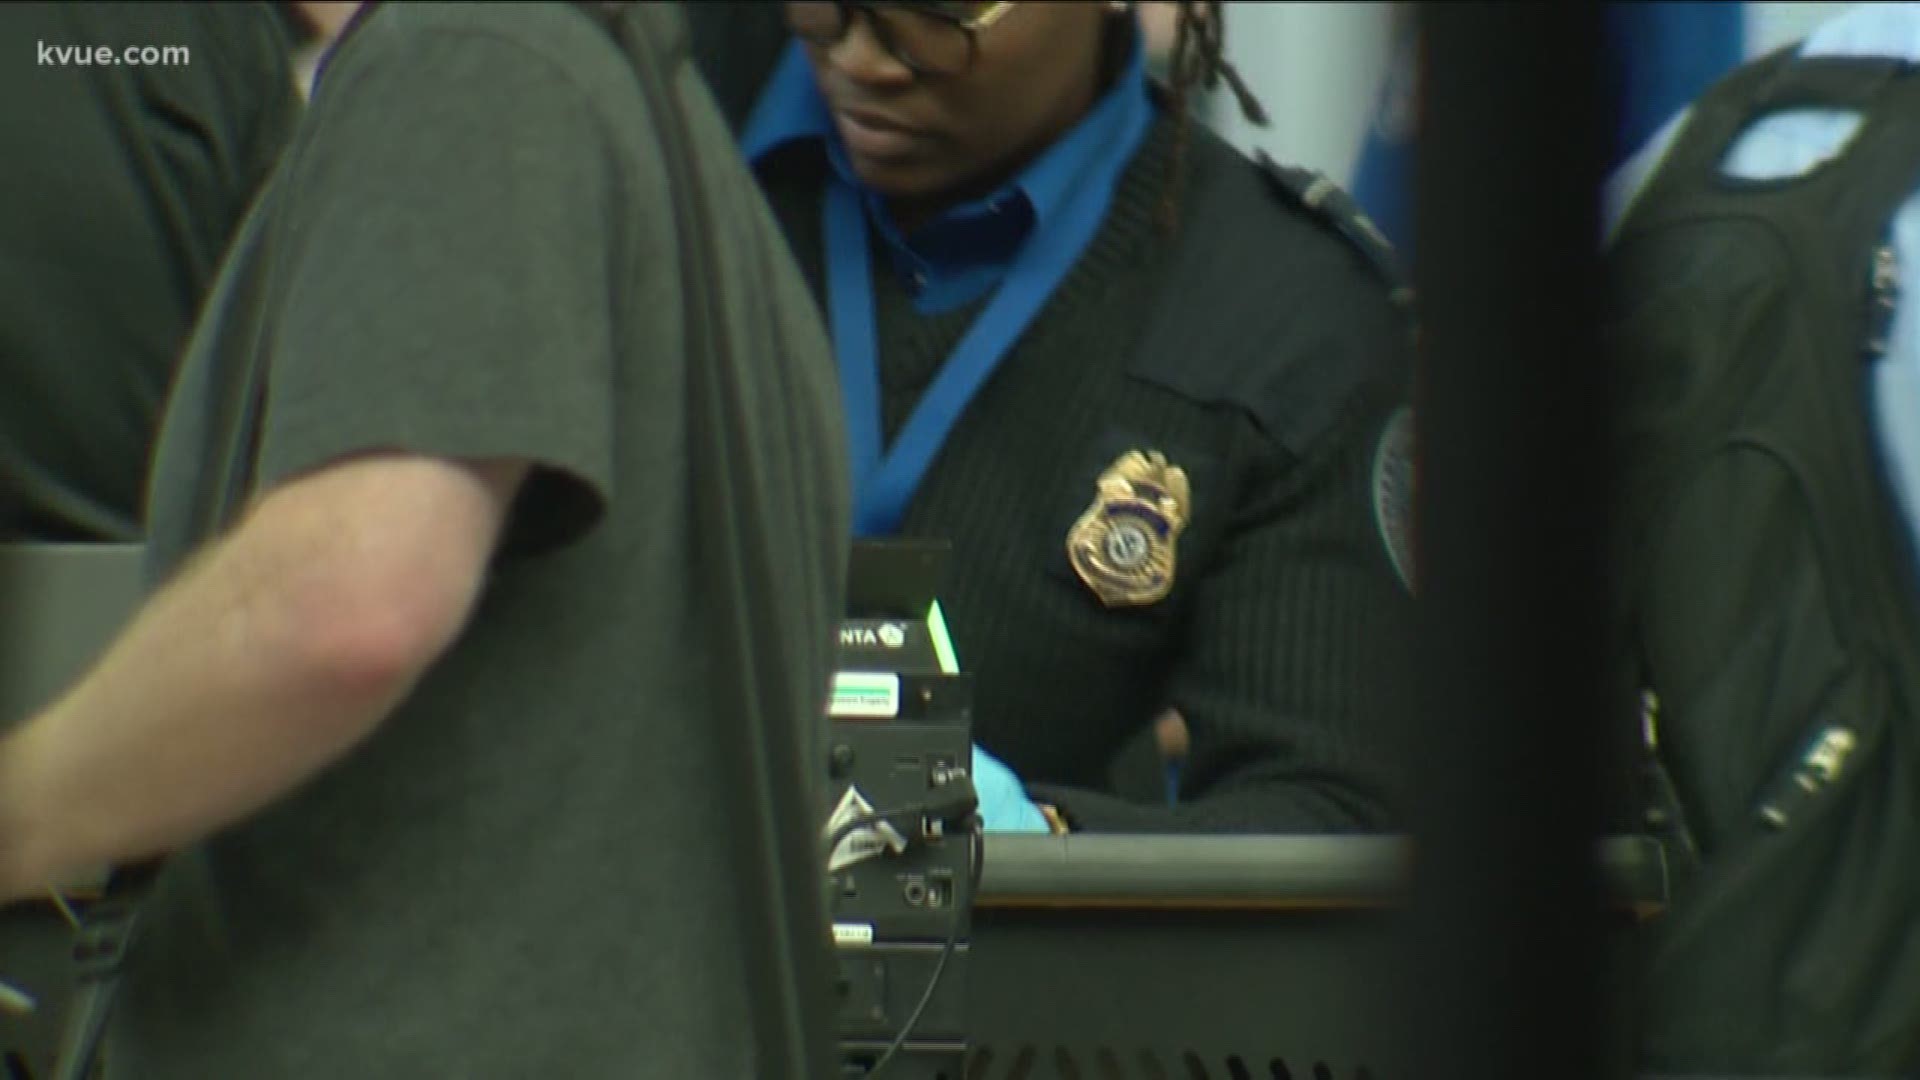 Two loaded guns found by TSA at Austin's Airport